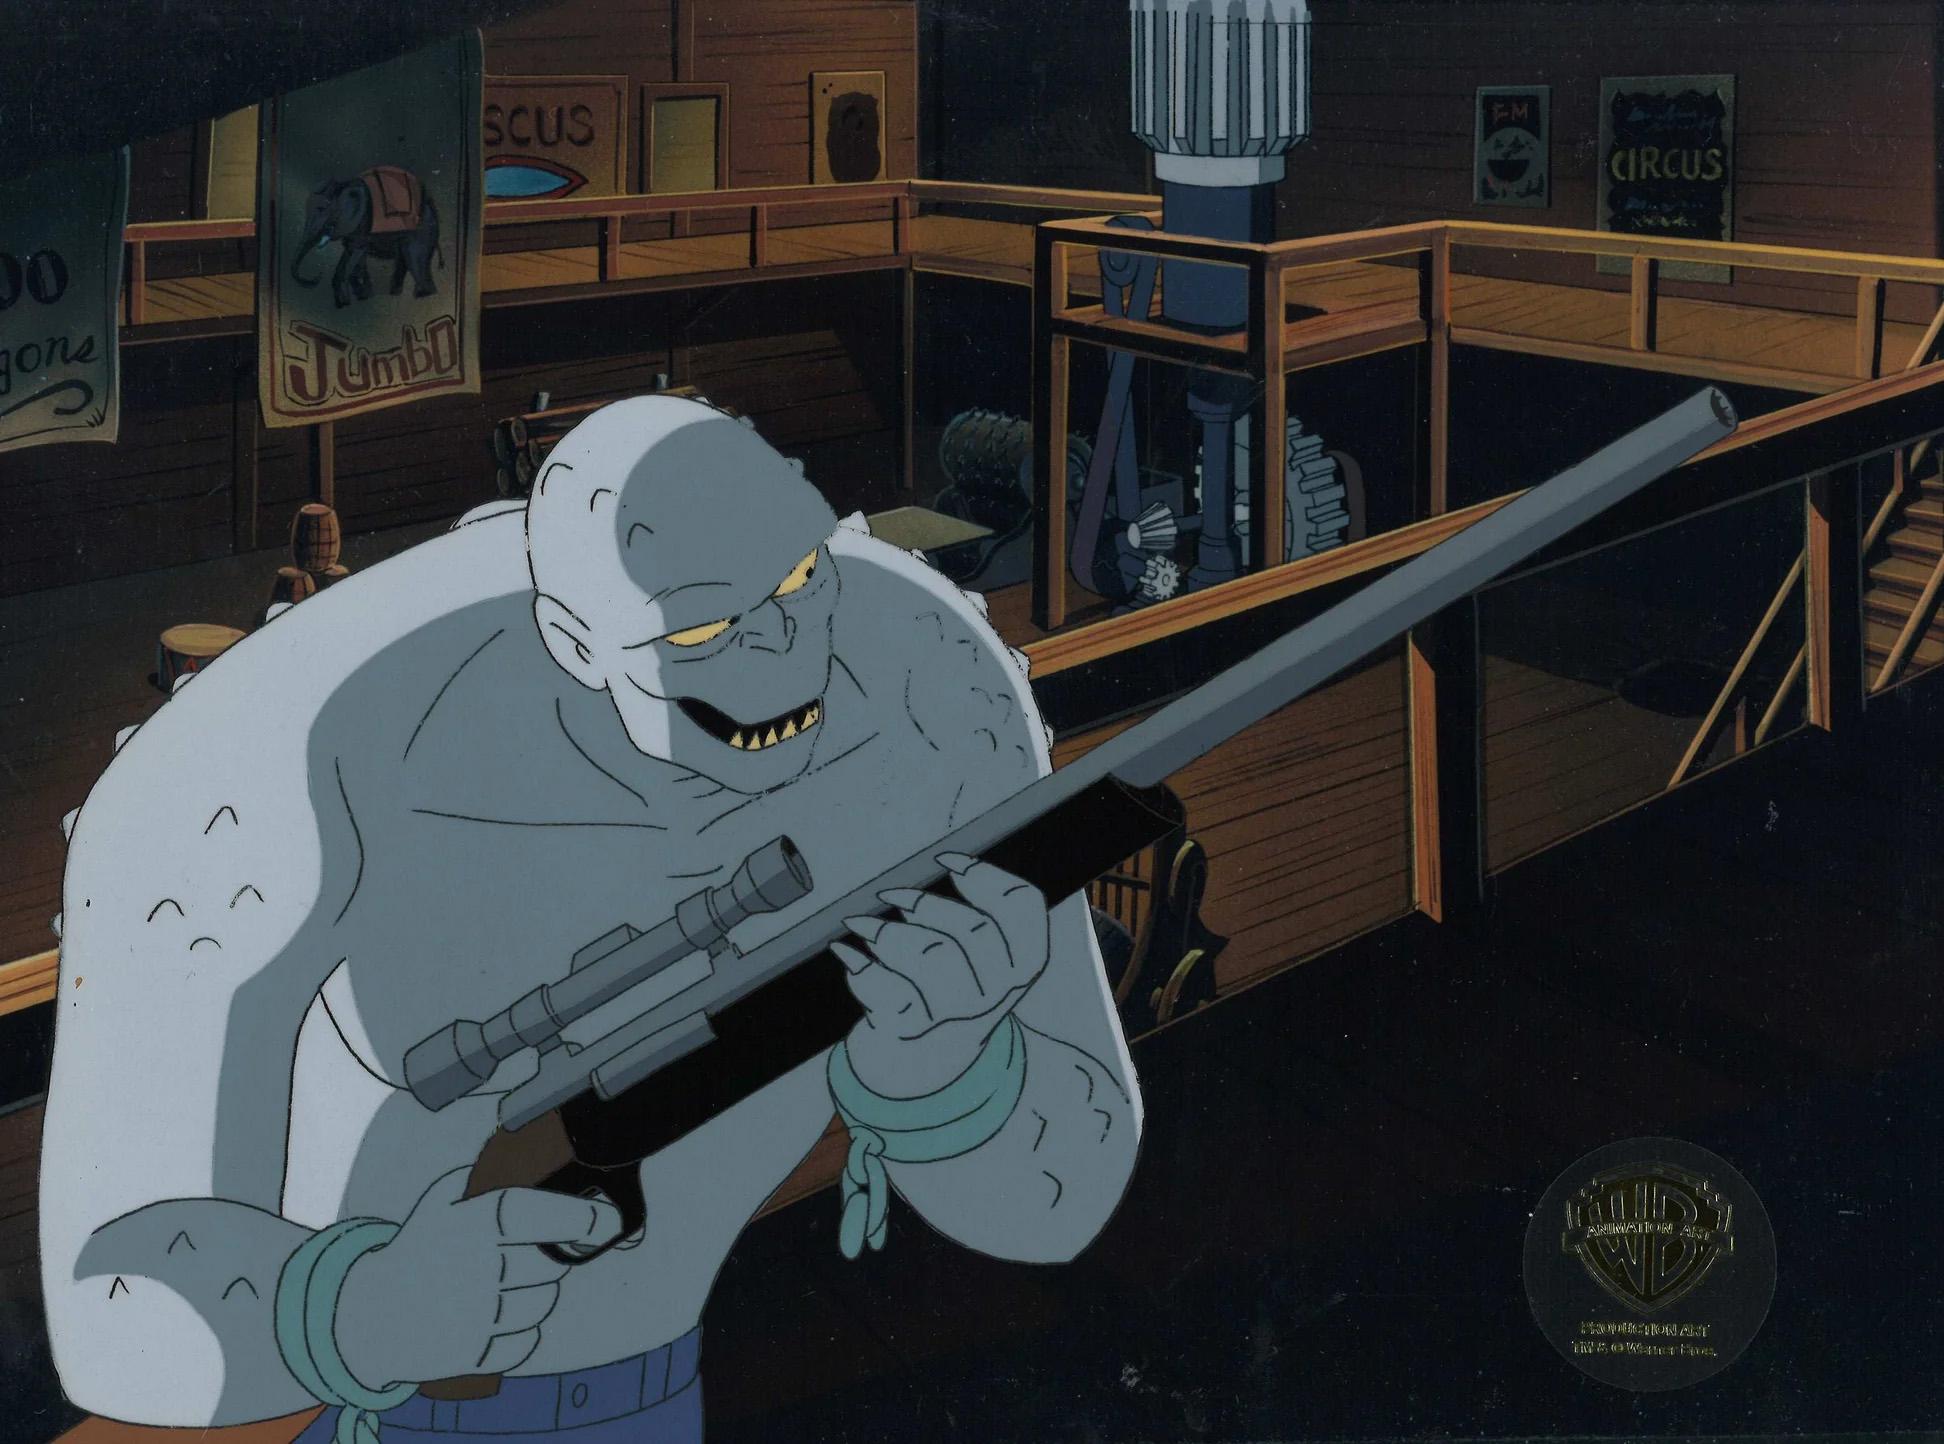 Batman The Animated Series Original Production Cel: Killer Croc - Art by DC Comics Studio Artists